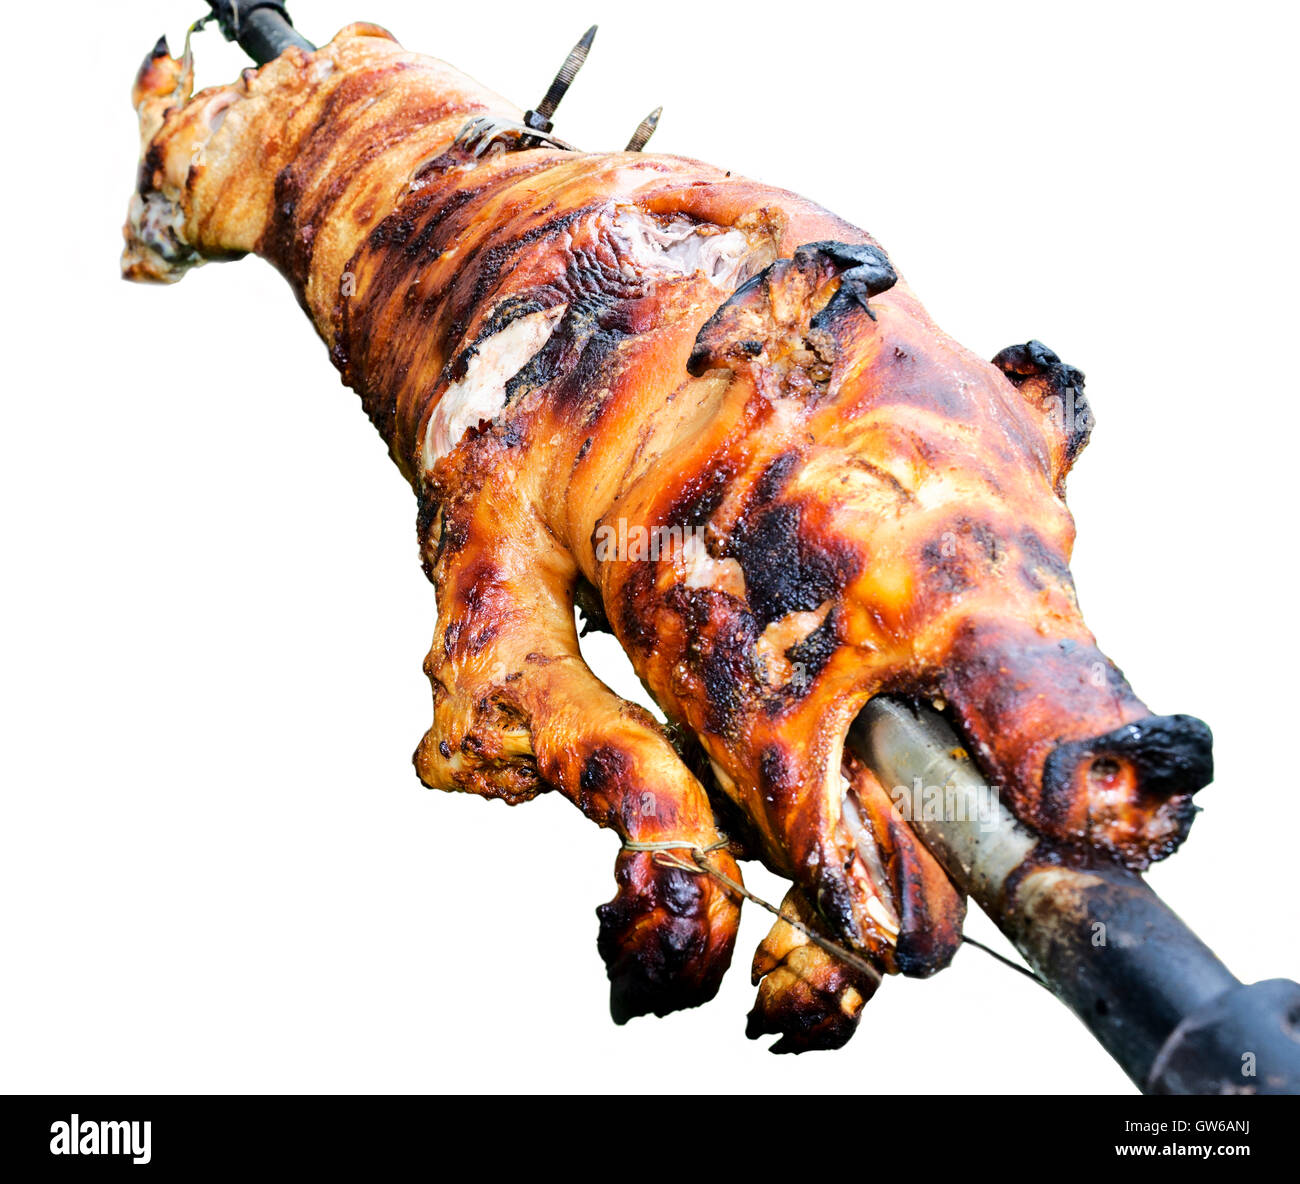 Pork roast Stock Photo